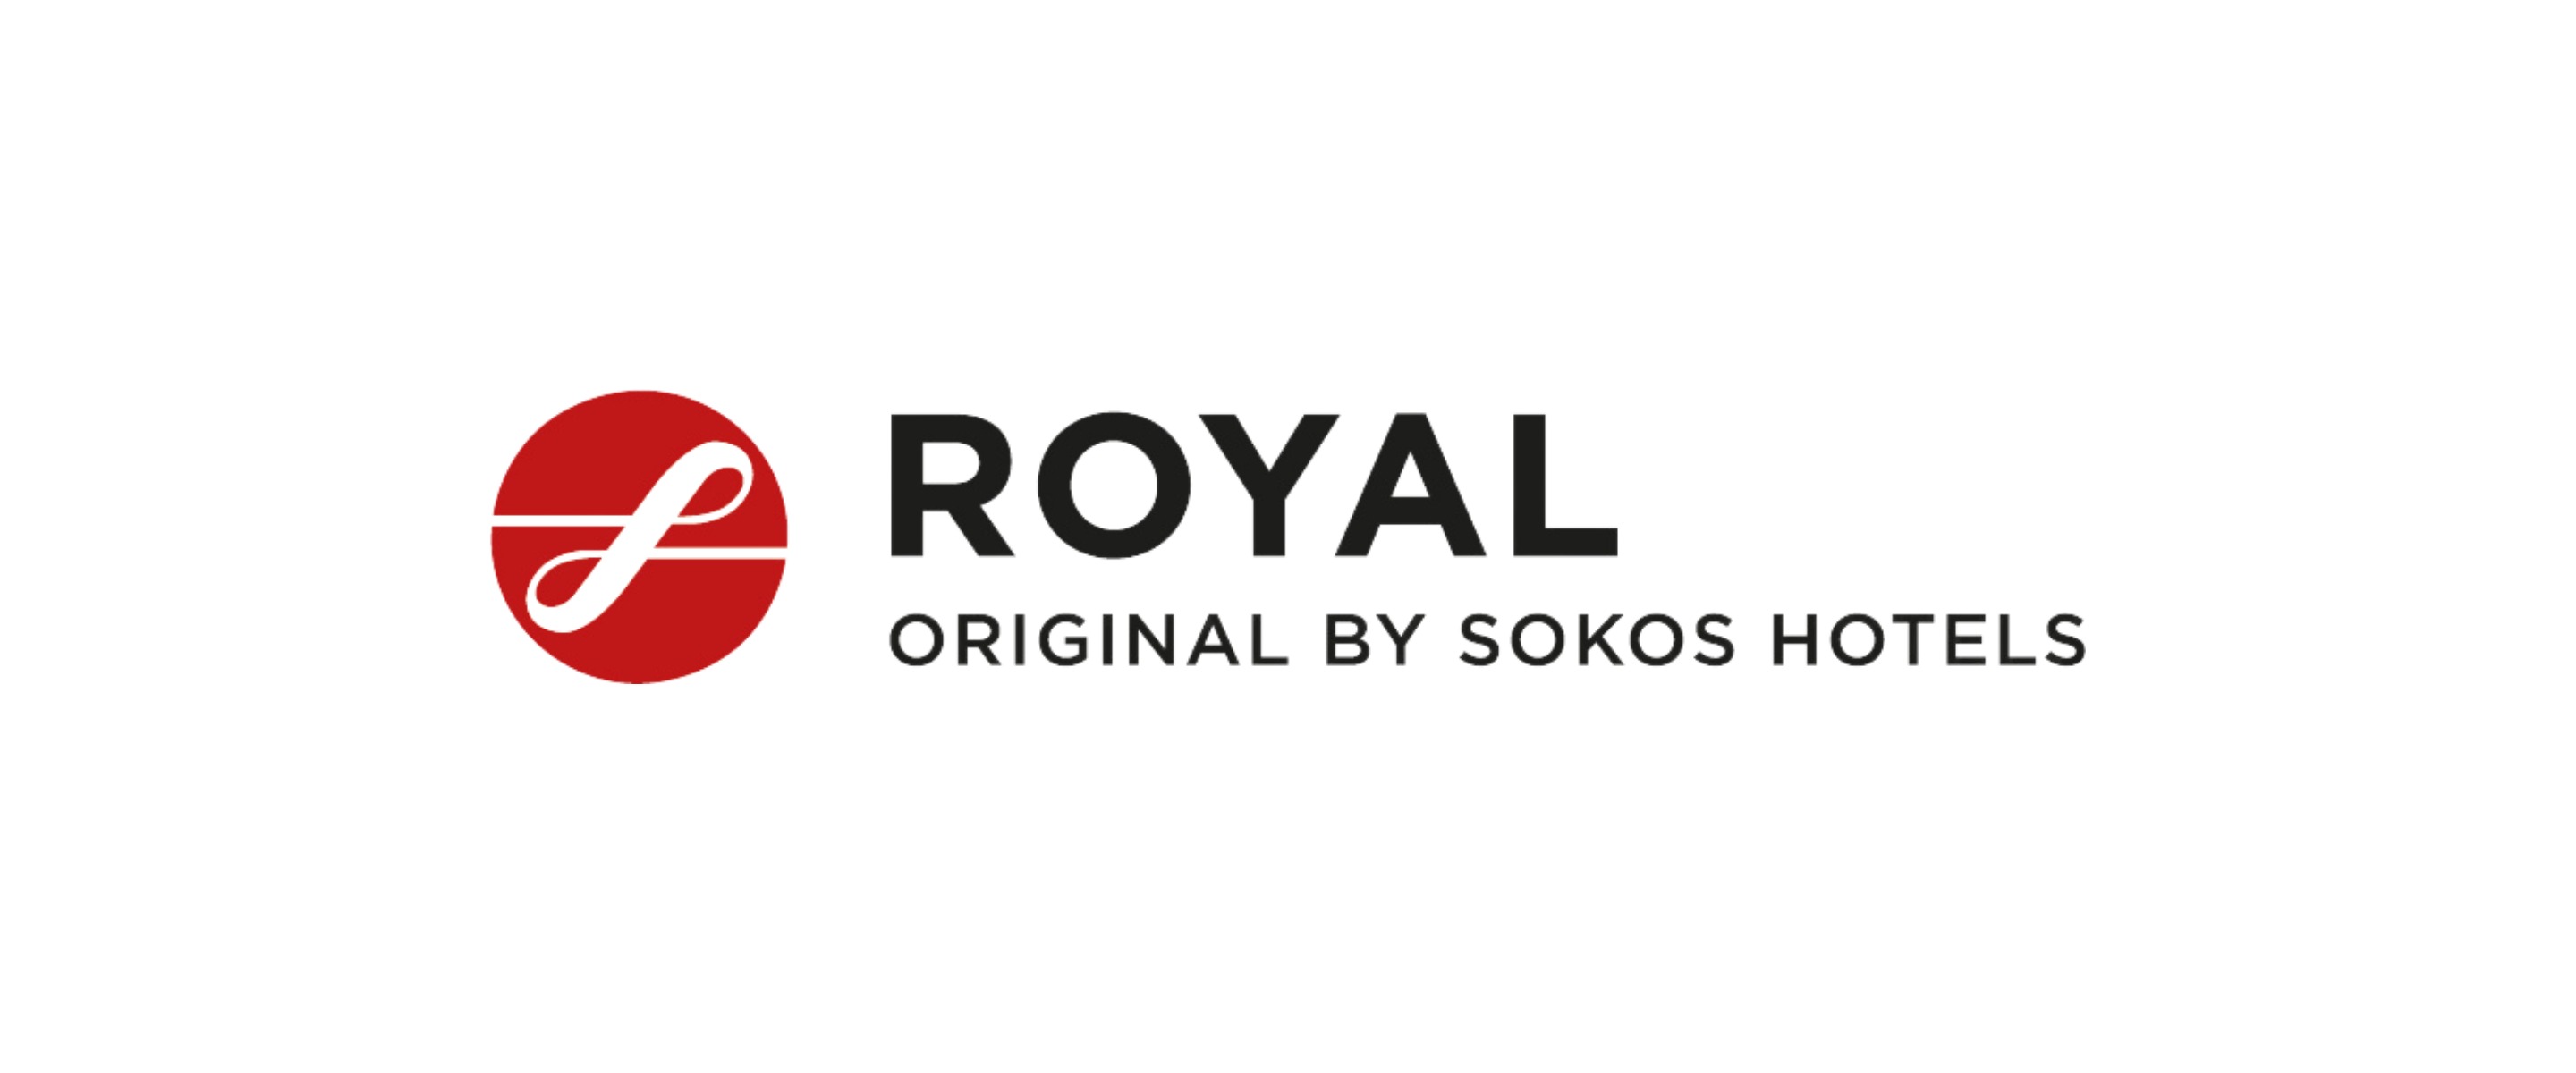 Original Sokos Hotel Royal, frukost